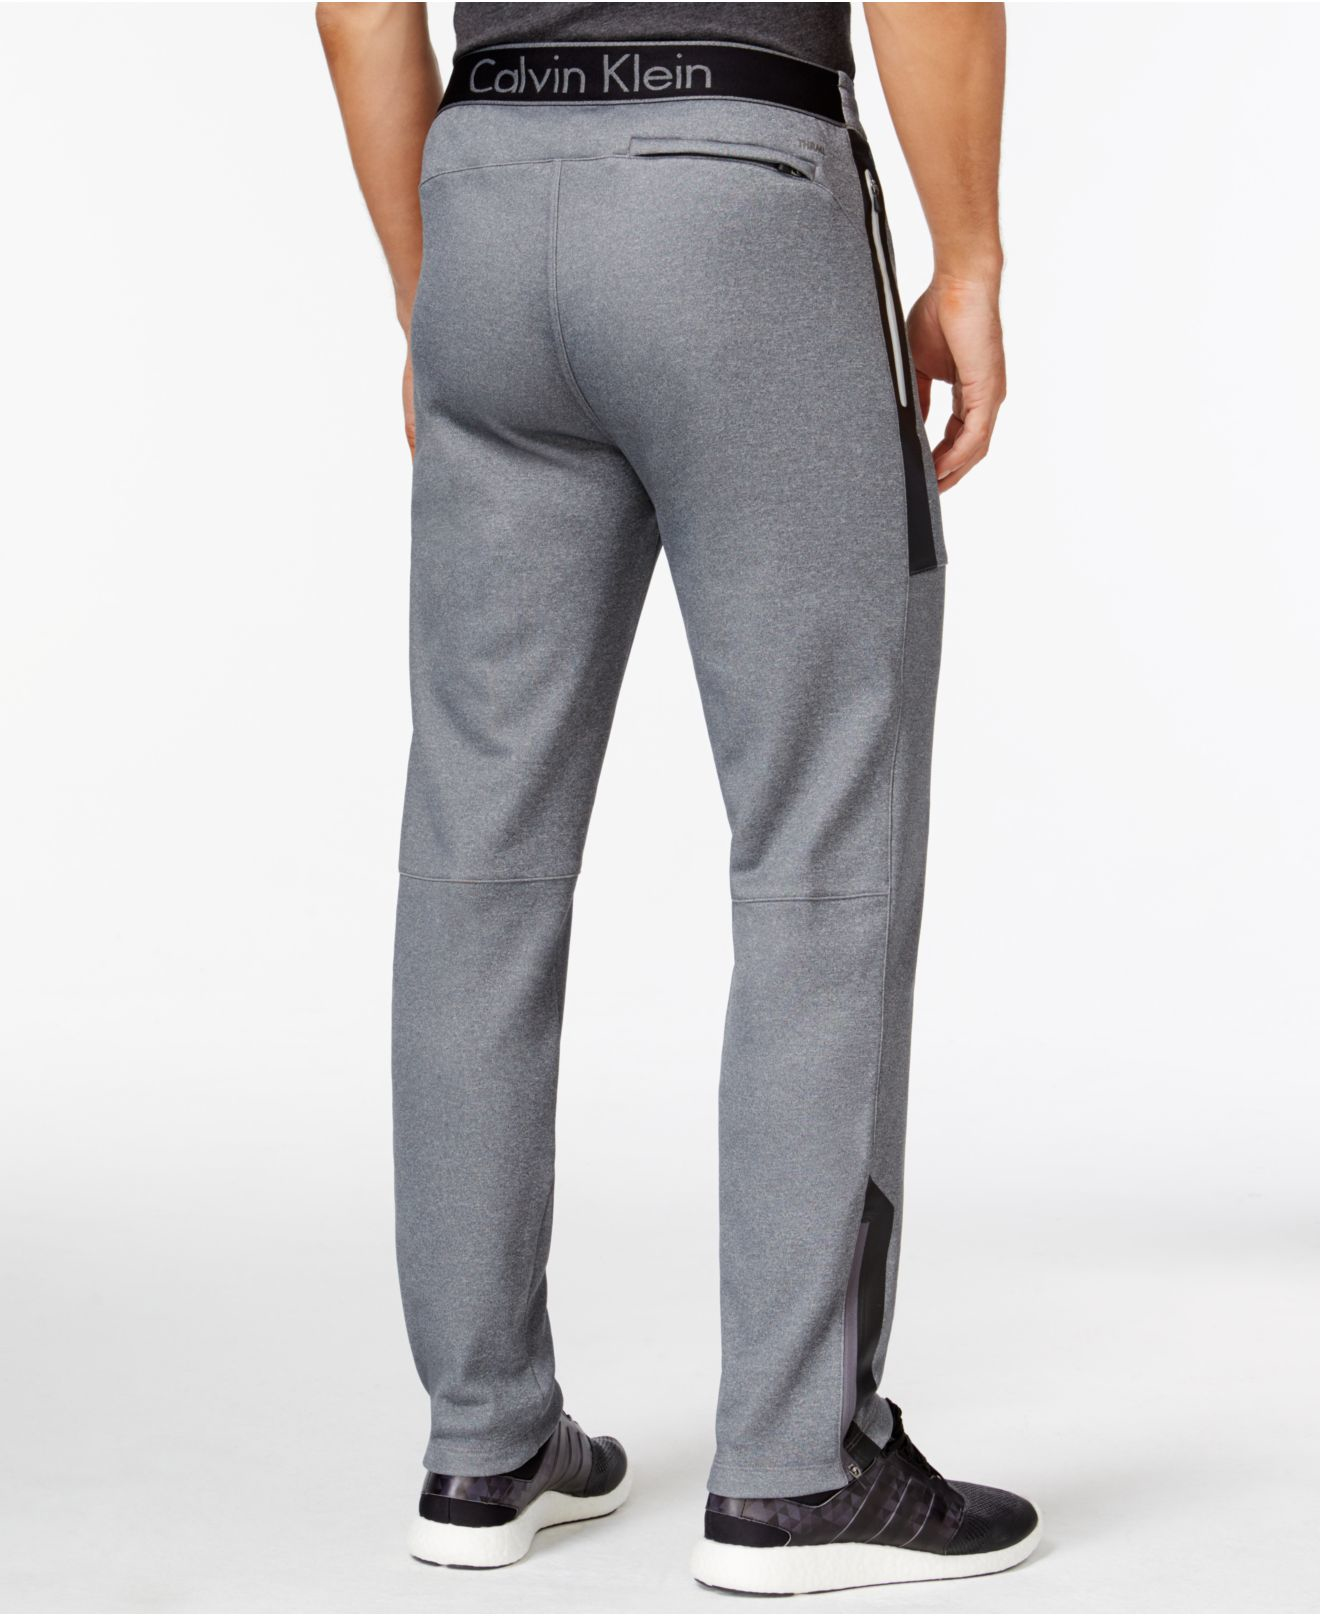 Calvin Klein Performance Sweatpants in Gray for Men - Lyst